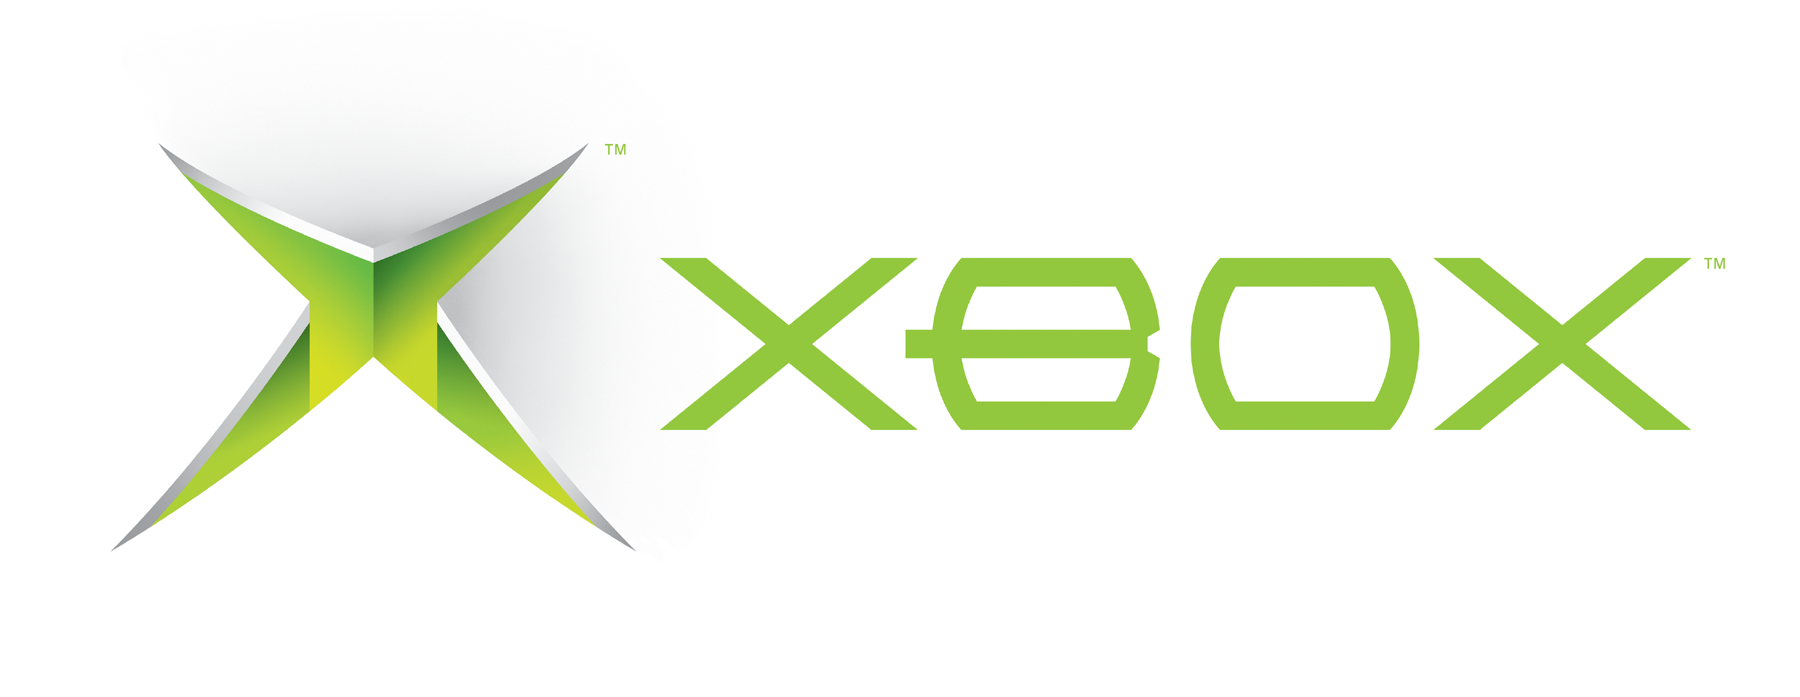 Xbox One Official Logo Xbox Logo Blackx Press 5 The